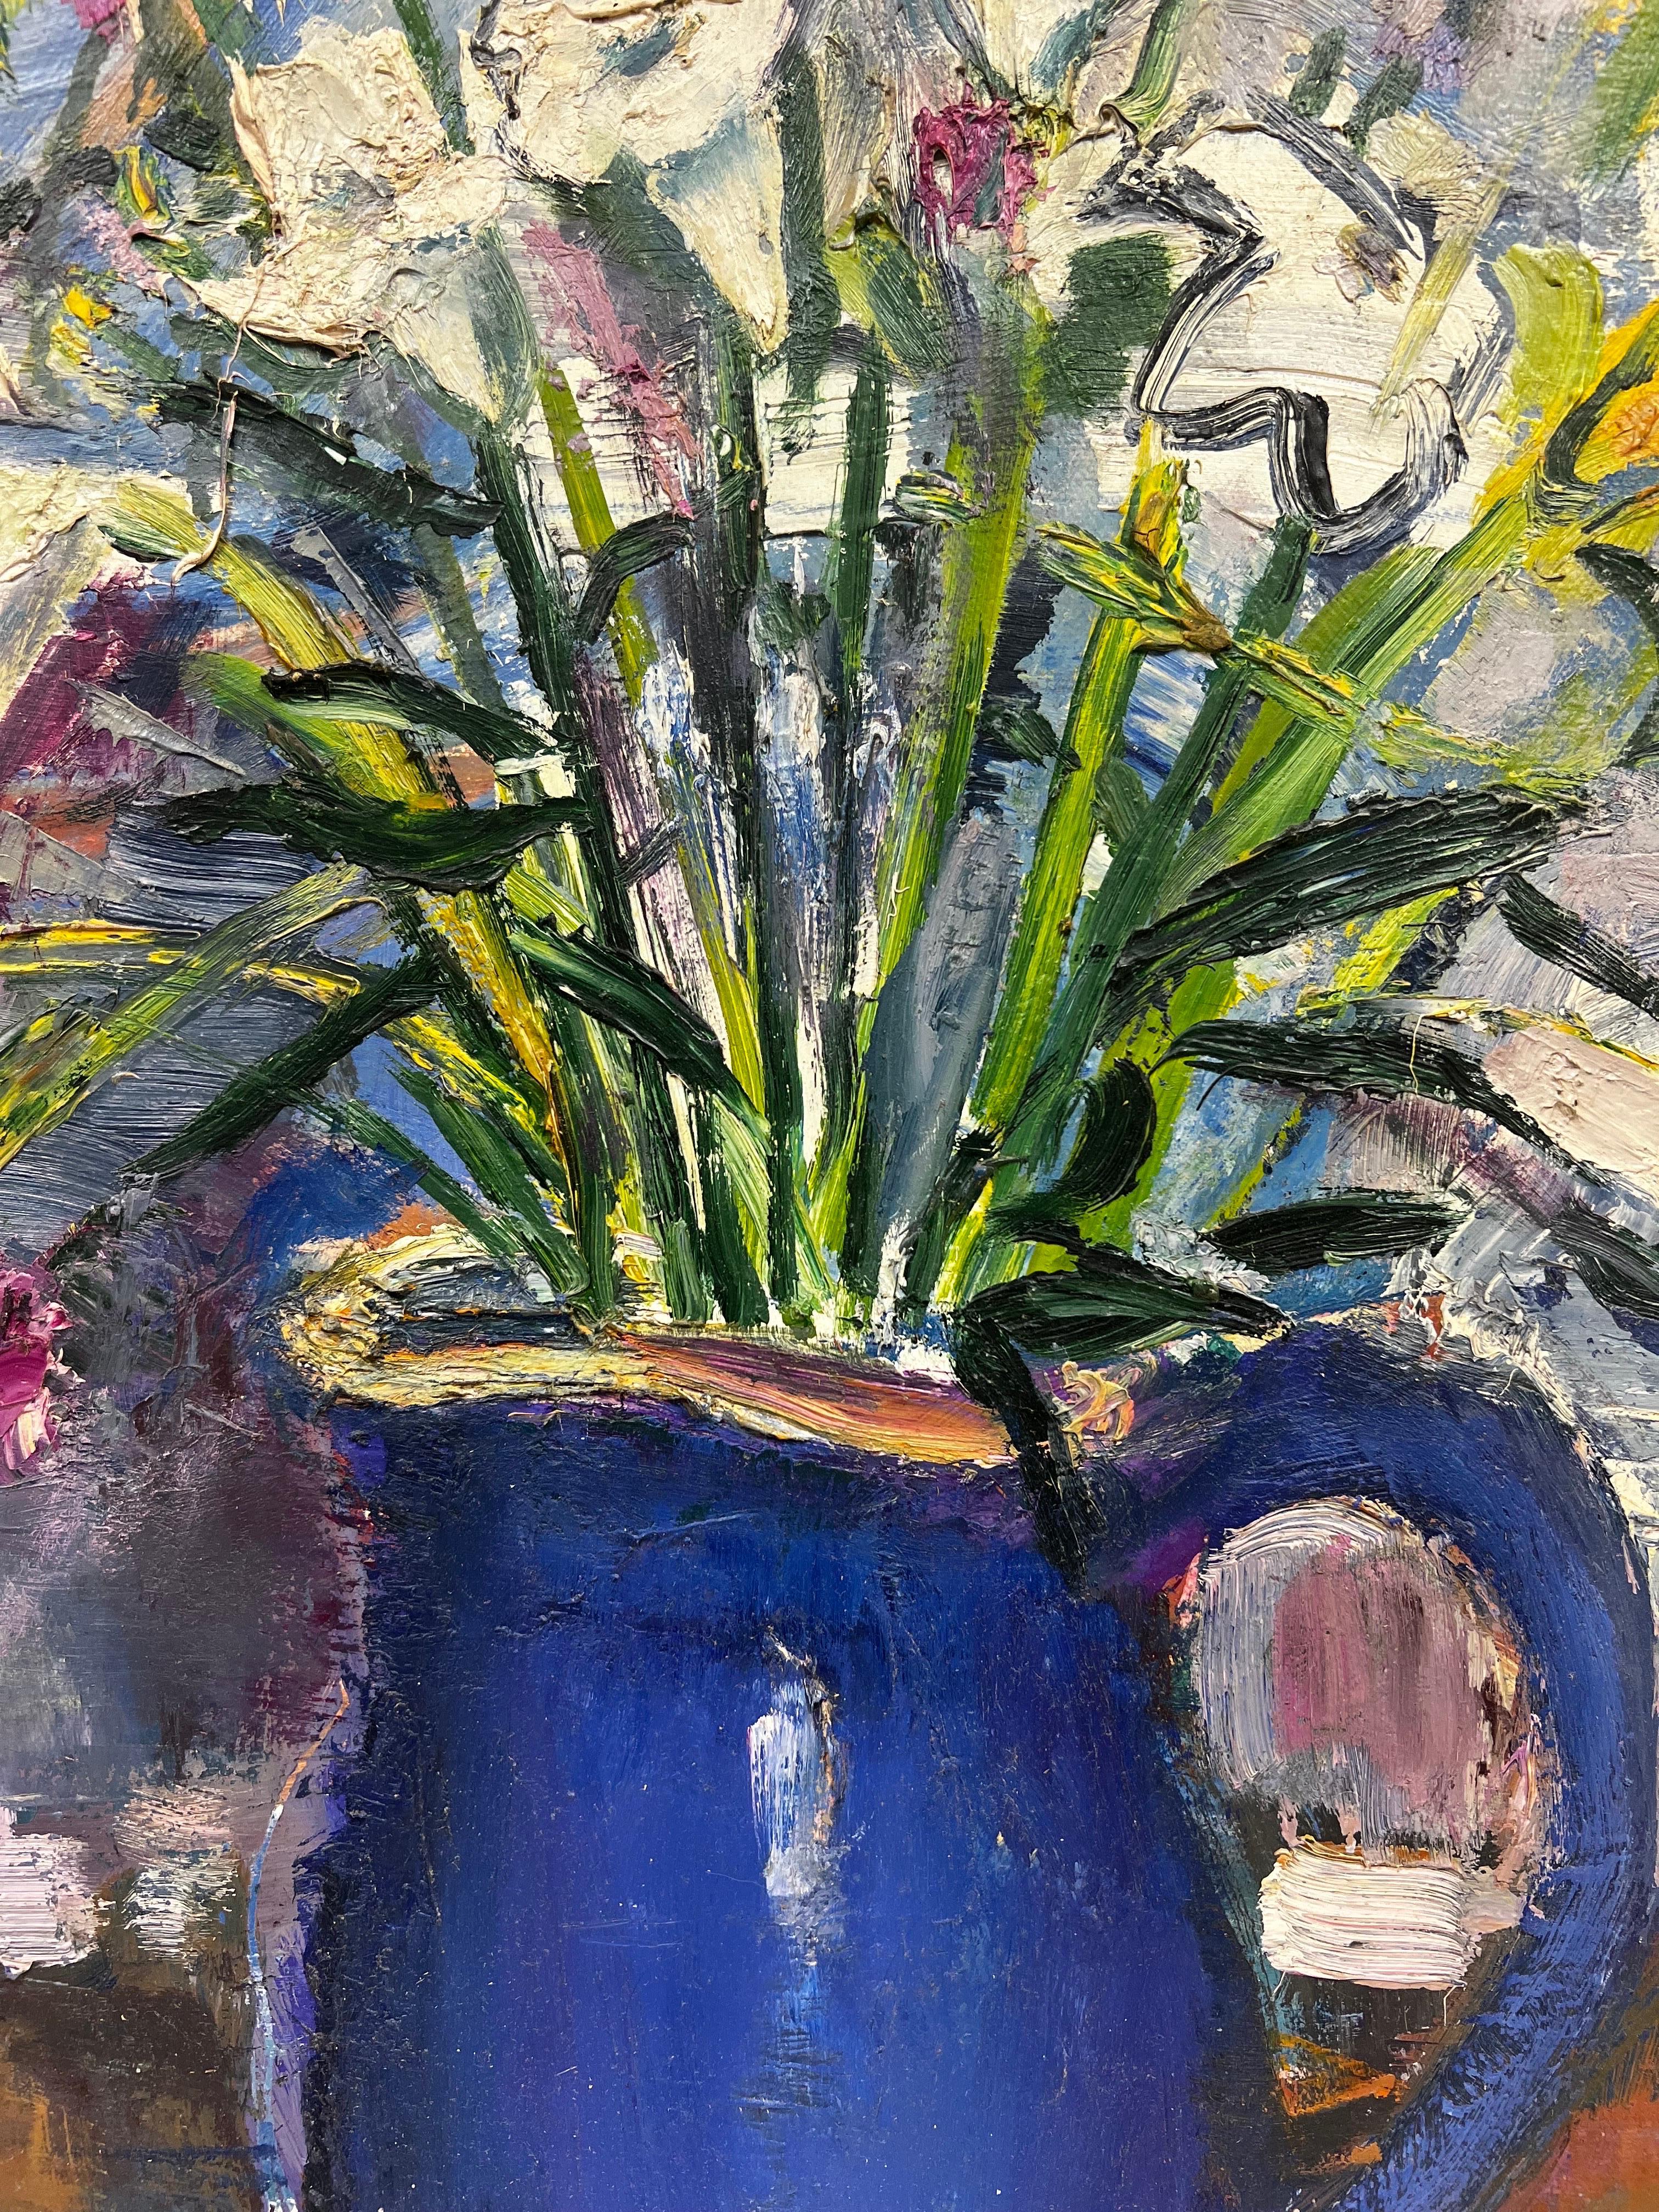 1970s French Interior Still Life - Flowers in deep Blue Vase - Superb Original  For Sale 1